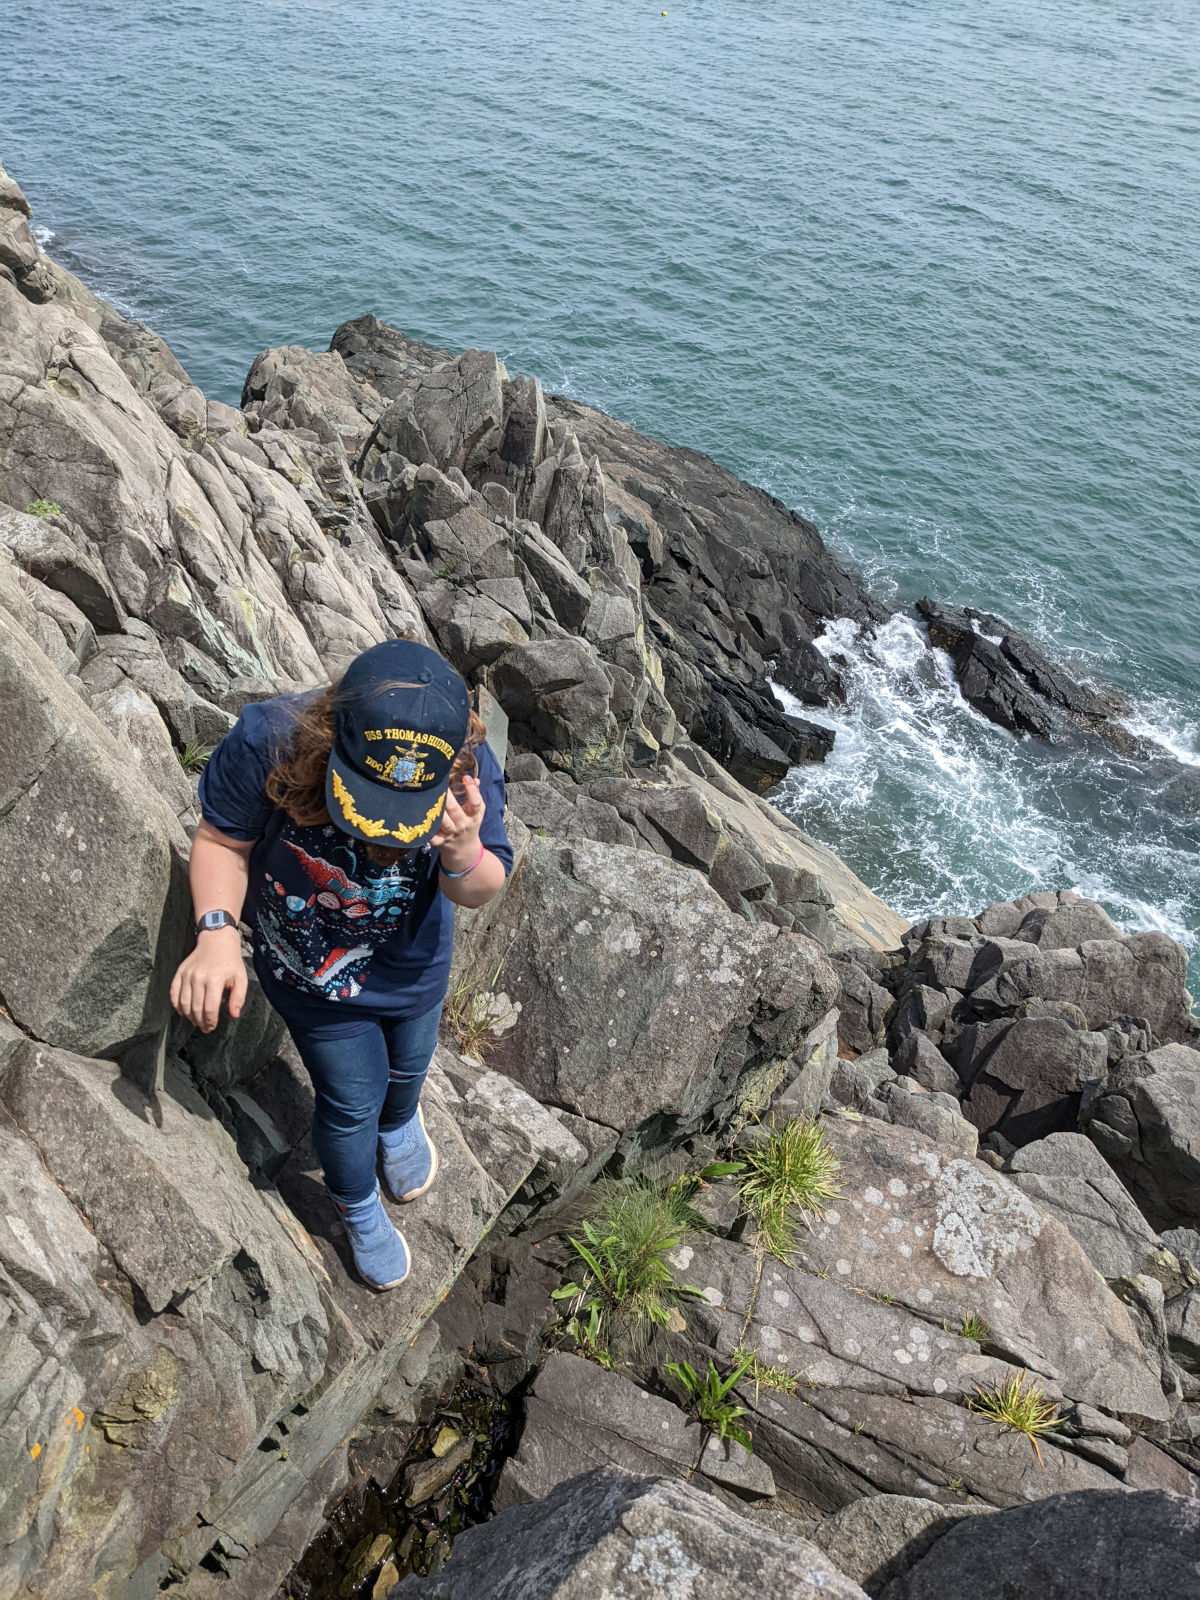 Fiona climbing on rocks